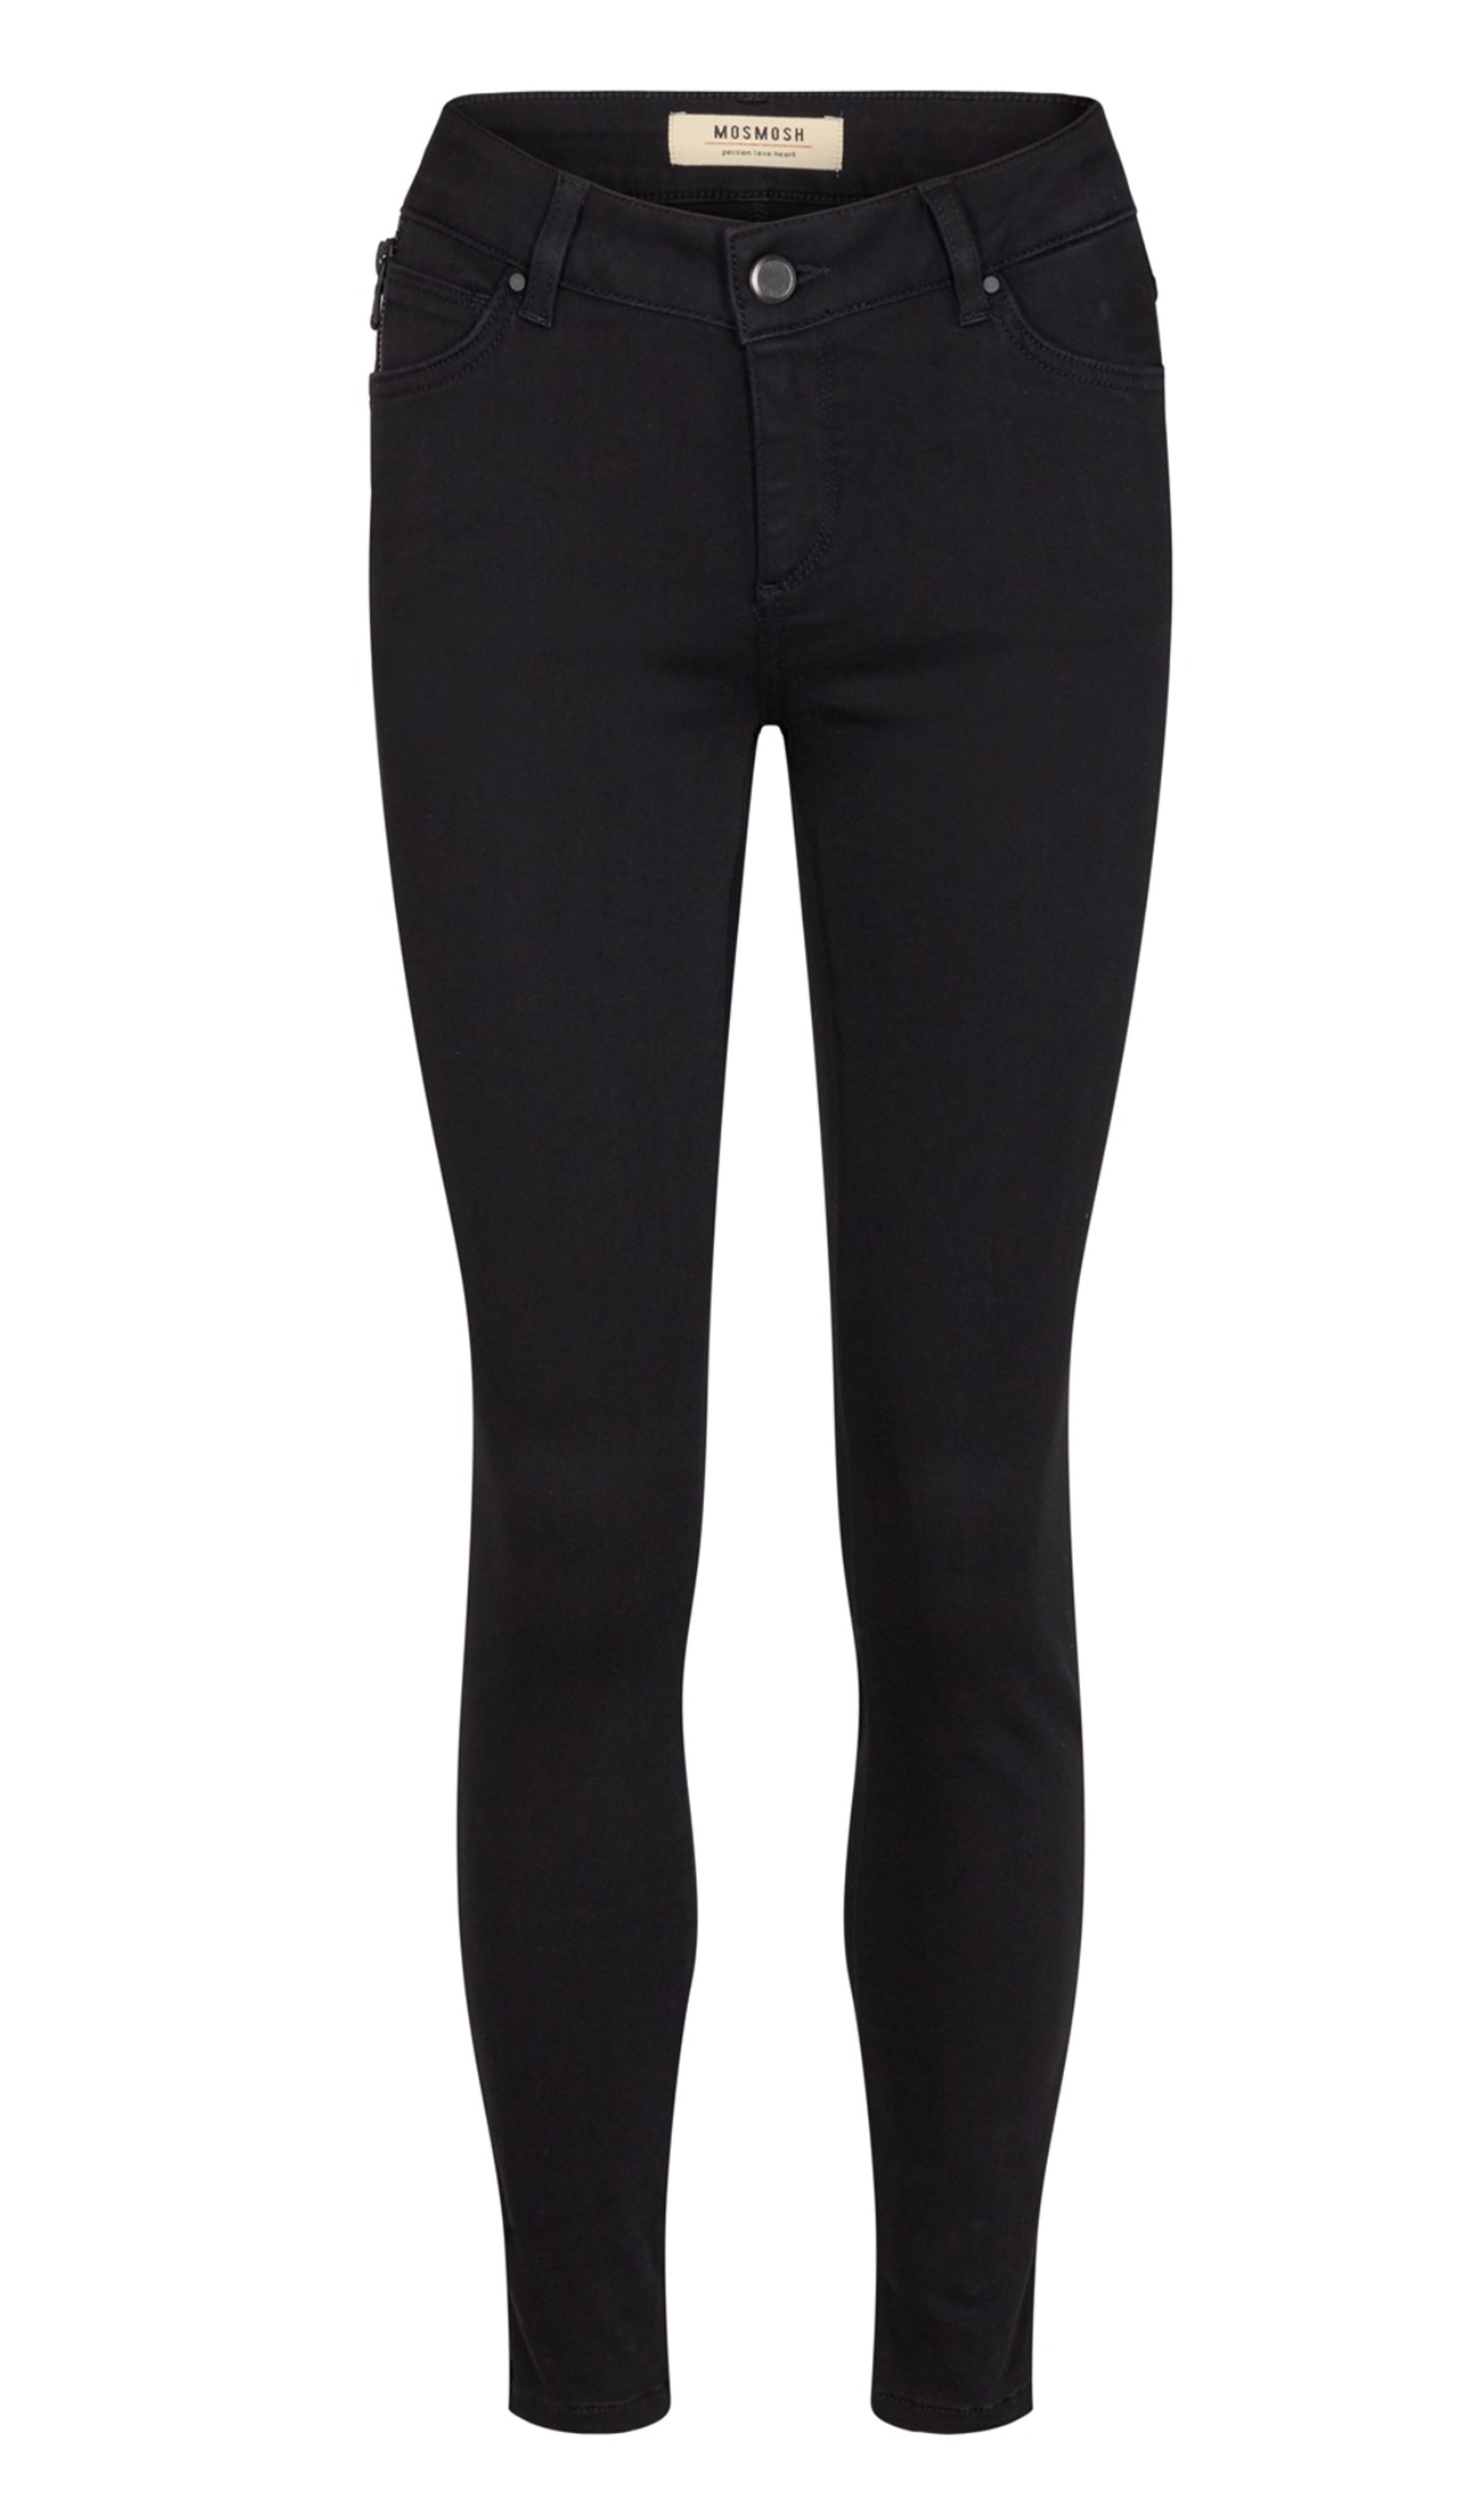 Mos Mosh - Jeans - Victoria 7/8 Silk Touch Jeans  - Black